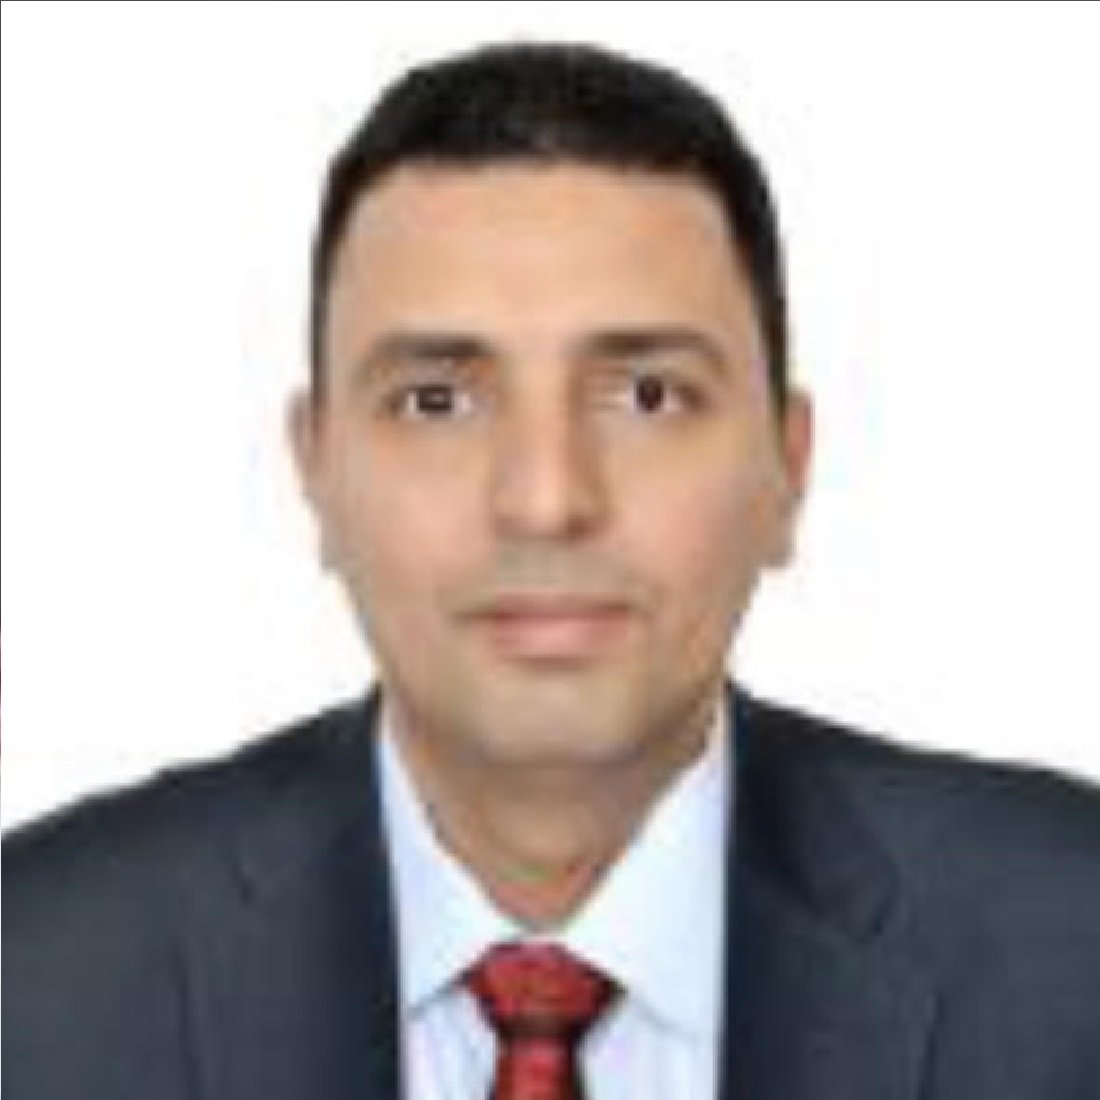 Dr. Shereef Elsamany